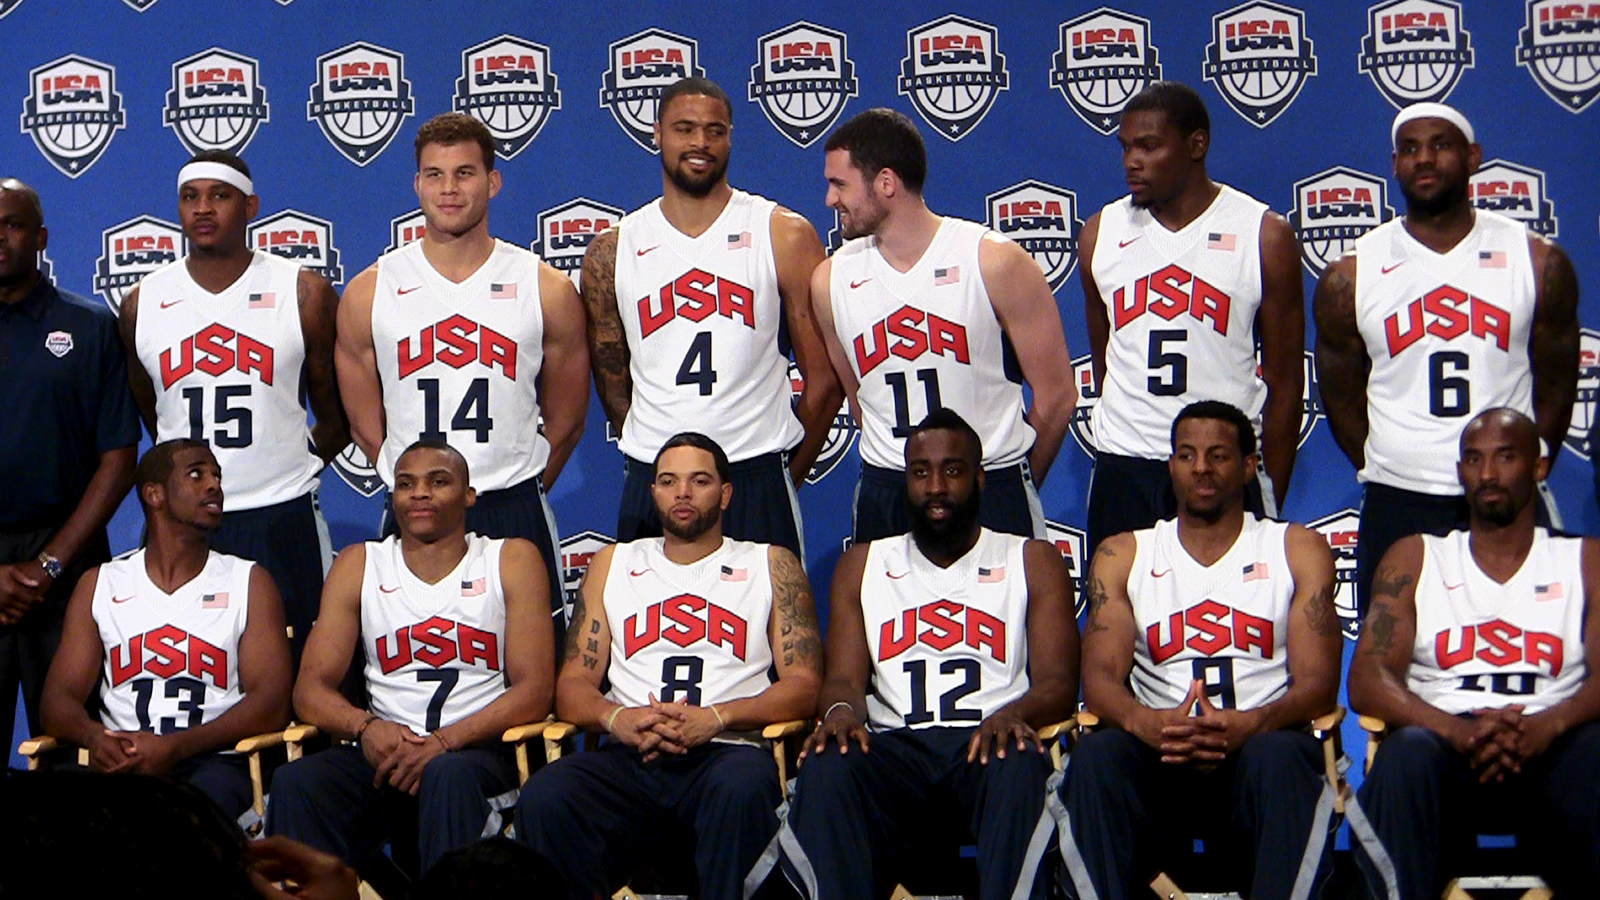 USA Basketball Team Wallpaper WallpaperSafari